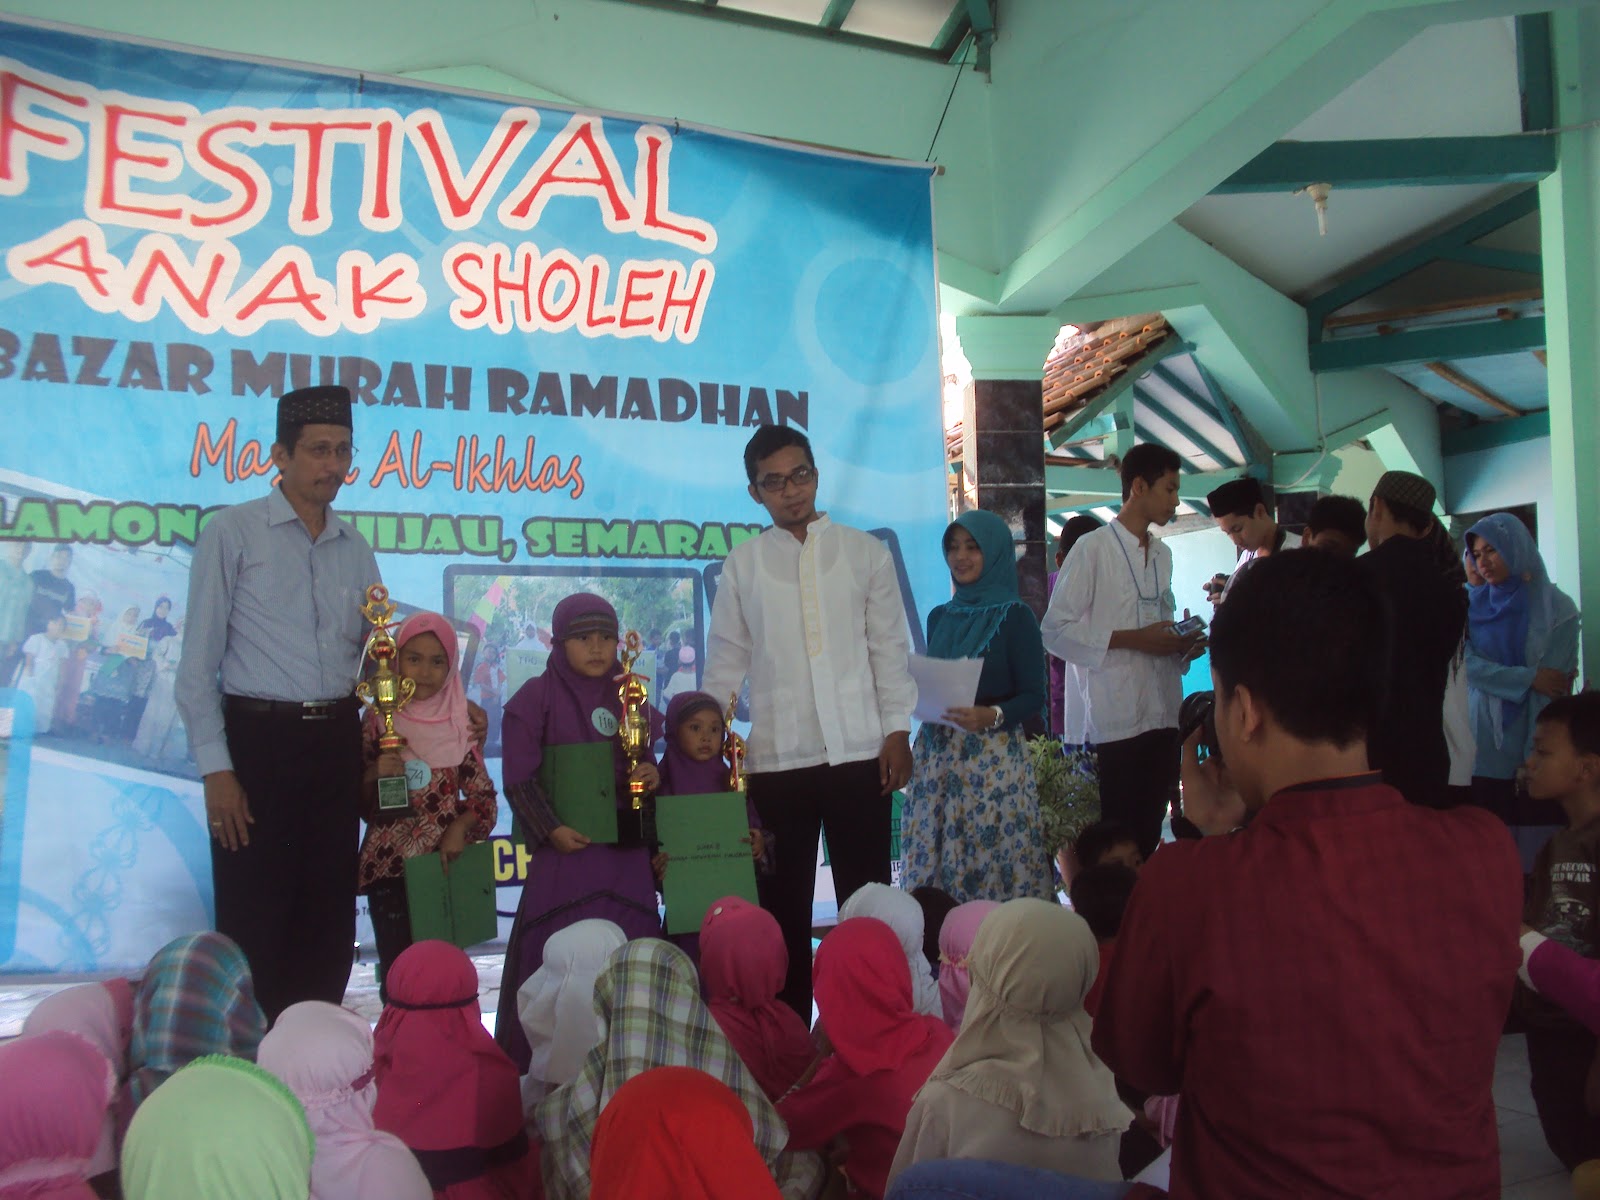 213 Bocah Ikuti Festival Anak Sholeh Harian Semarang Pemenang Lomba